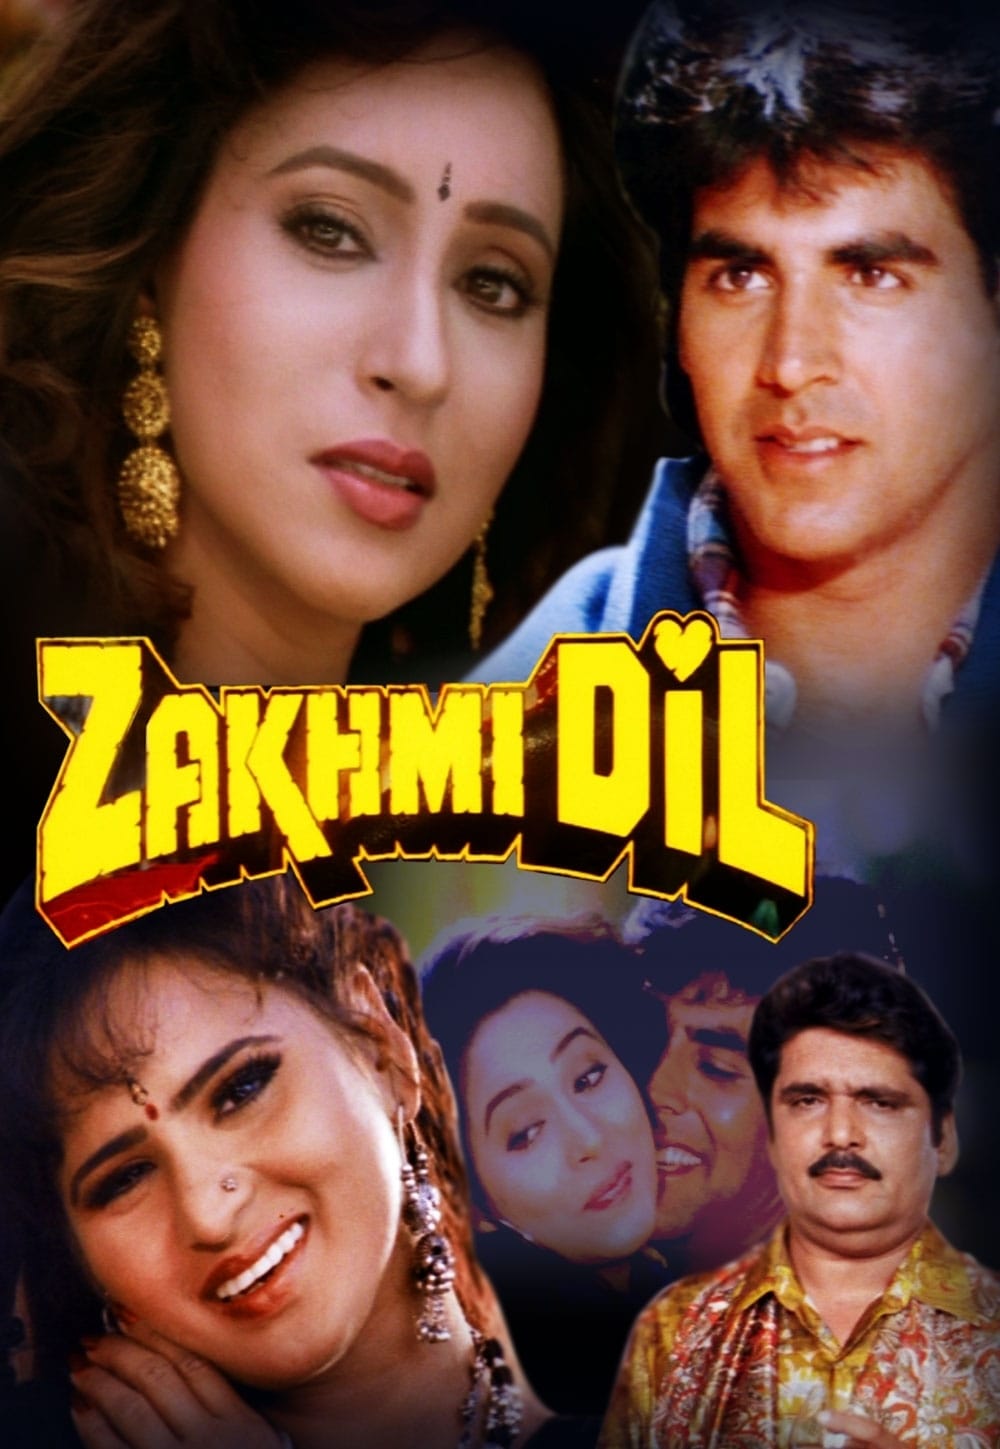 Poster for the movie "Zakhmi Dil"